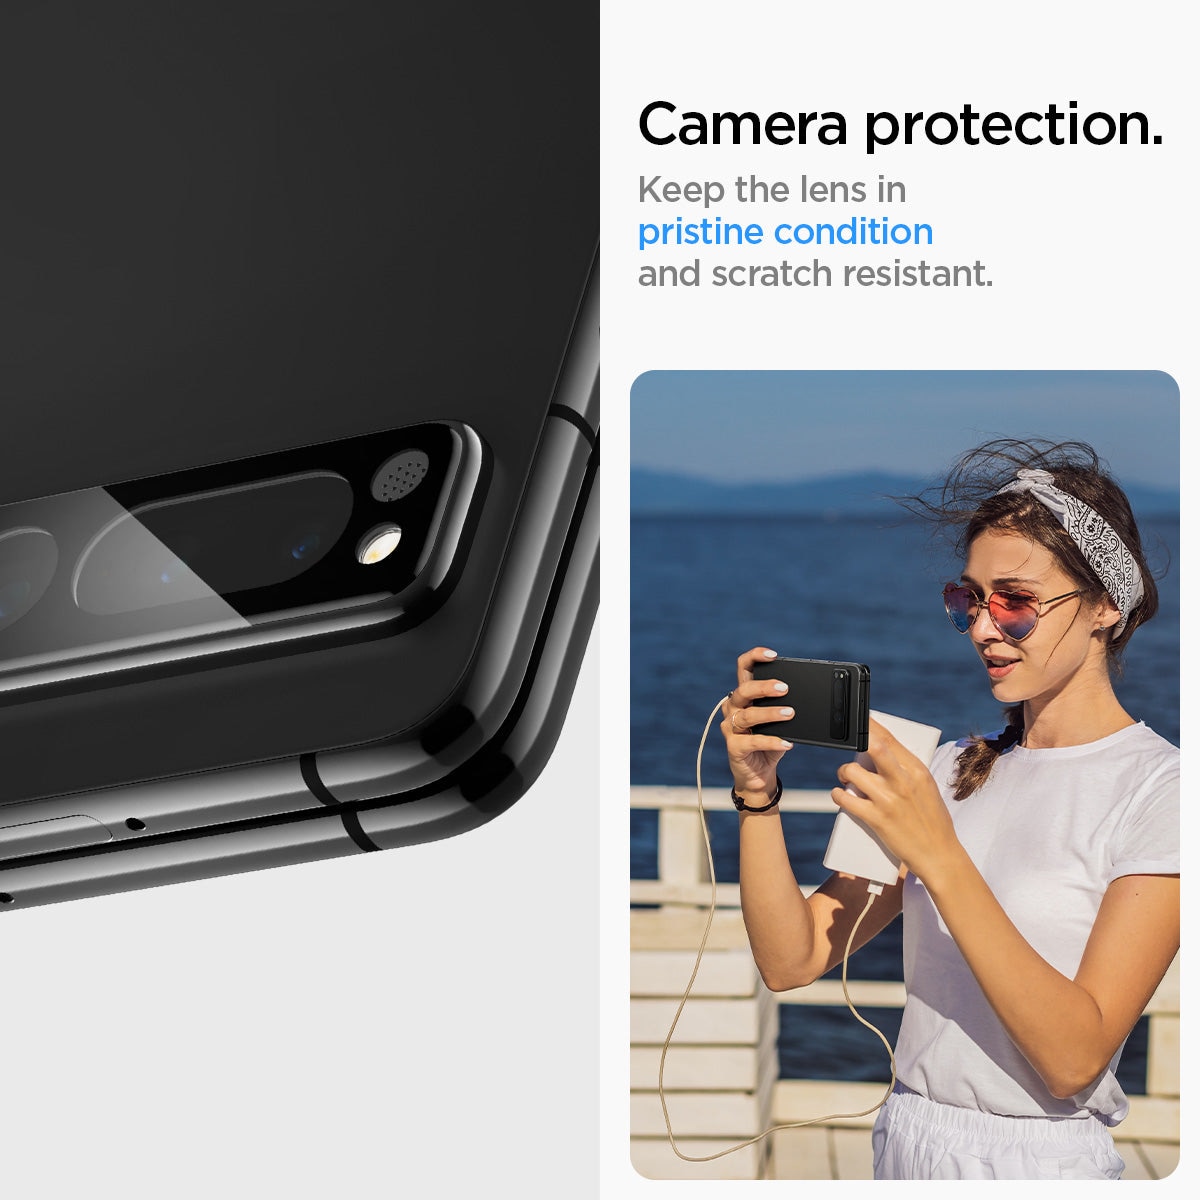 Google Pixel Fold EZ Fit Optik Lens Protector (2-pack) Black